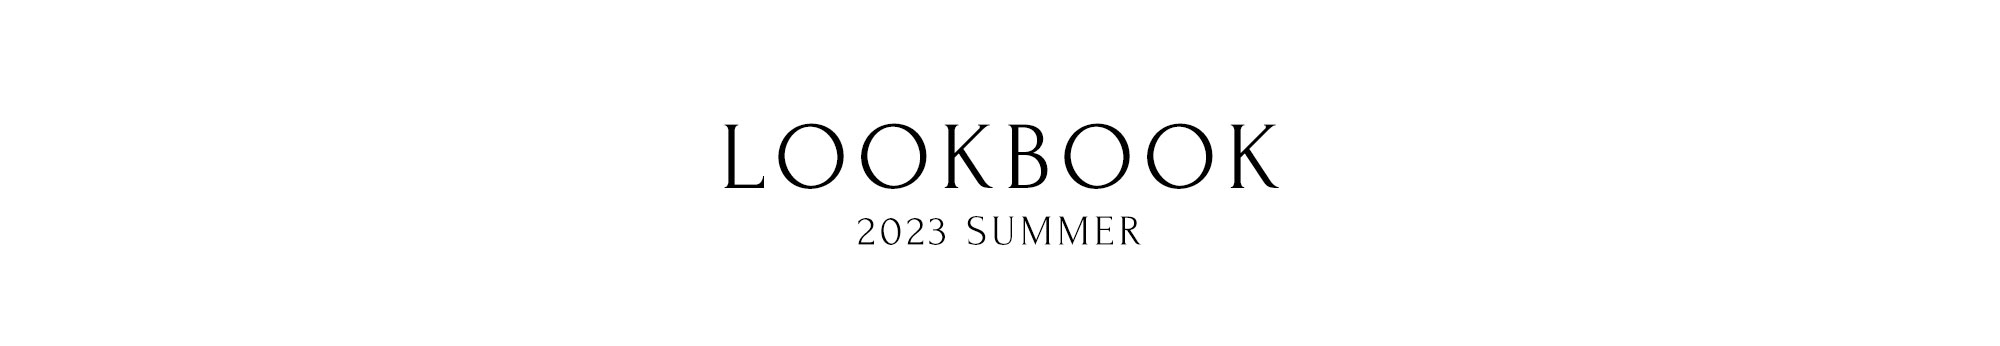 LOOKBOOK2023 SUMMER